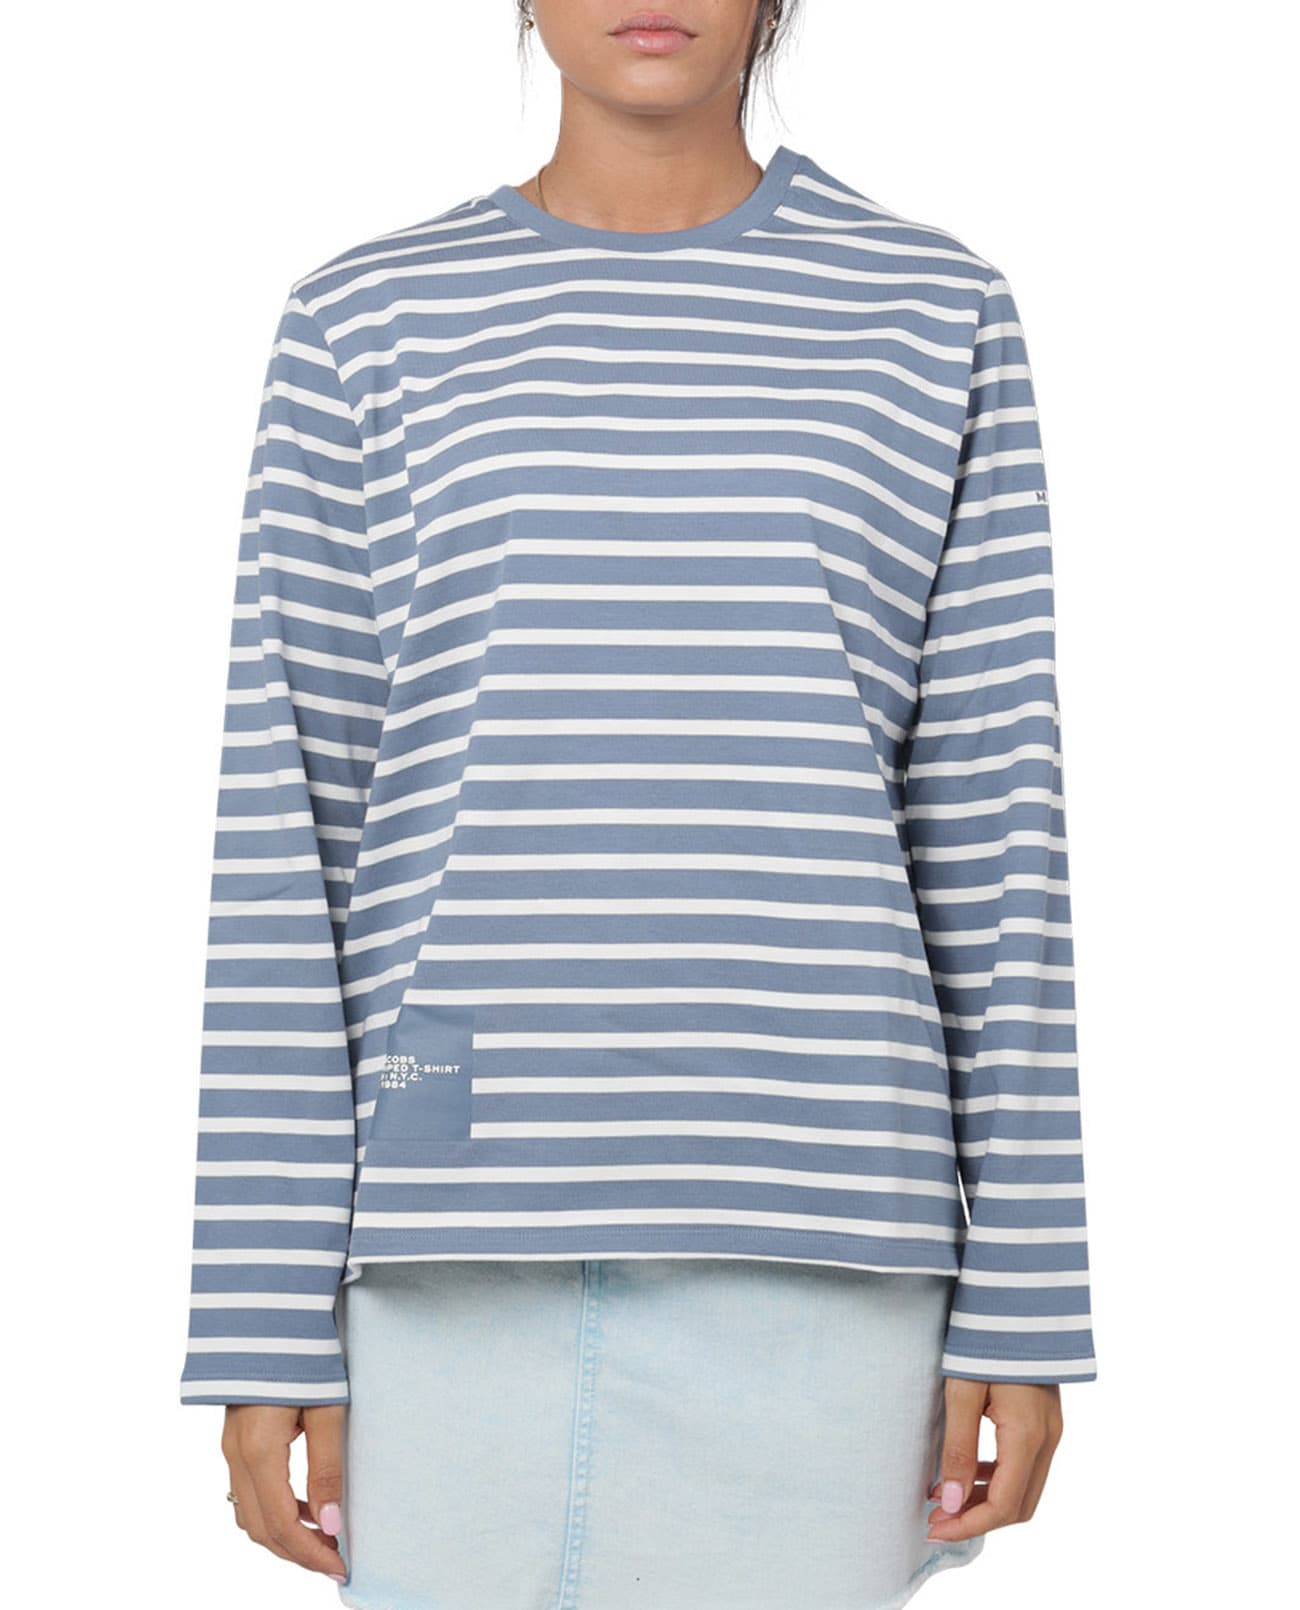 The Marc Jacobs Blue Striped Traveler T-shirt